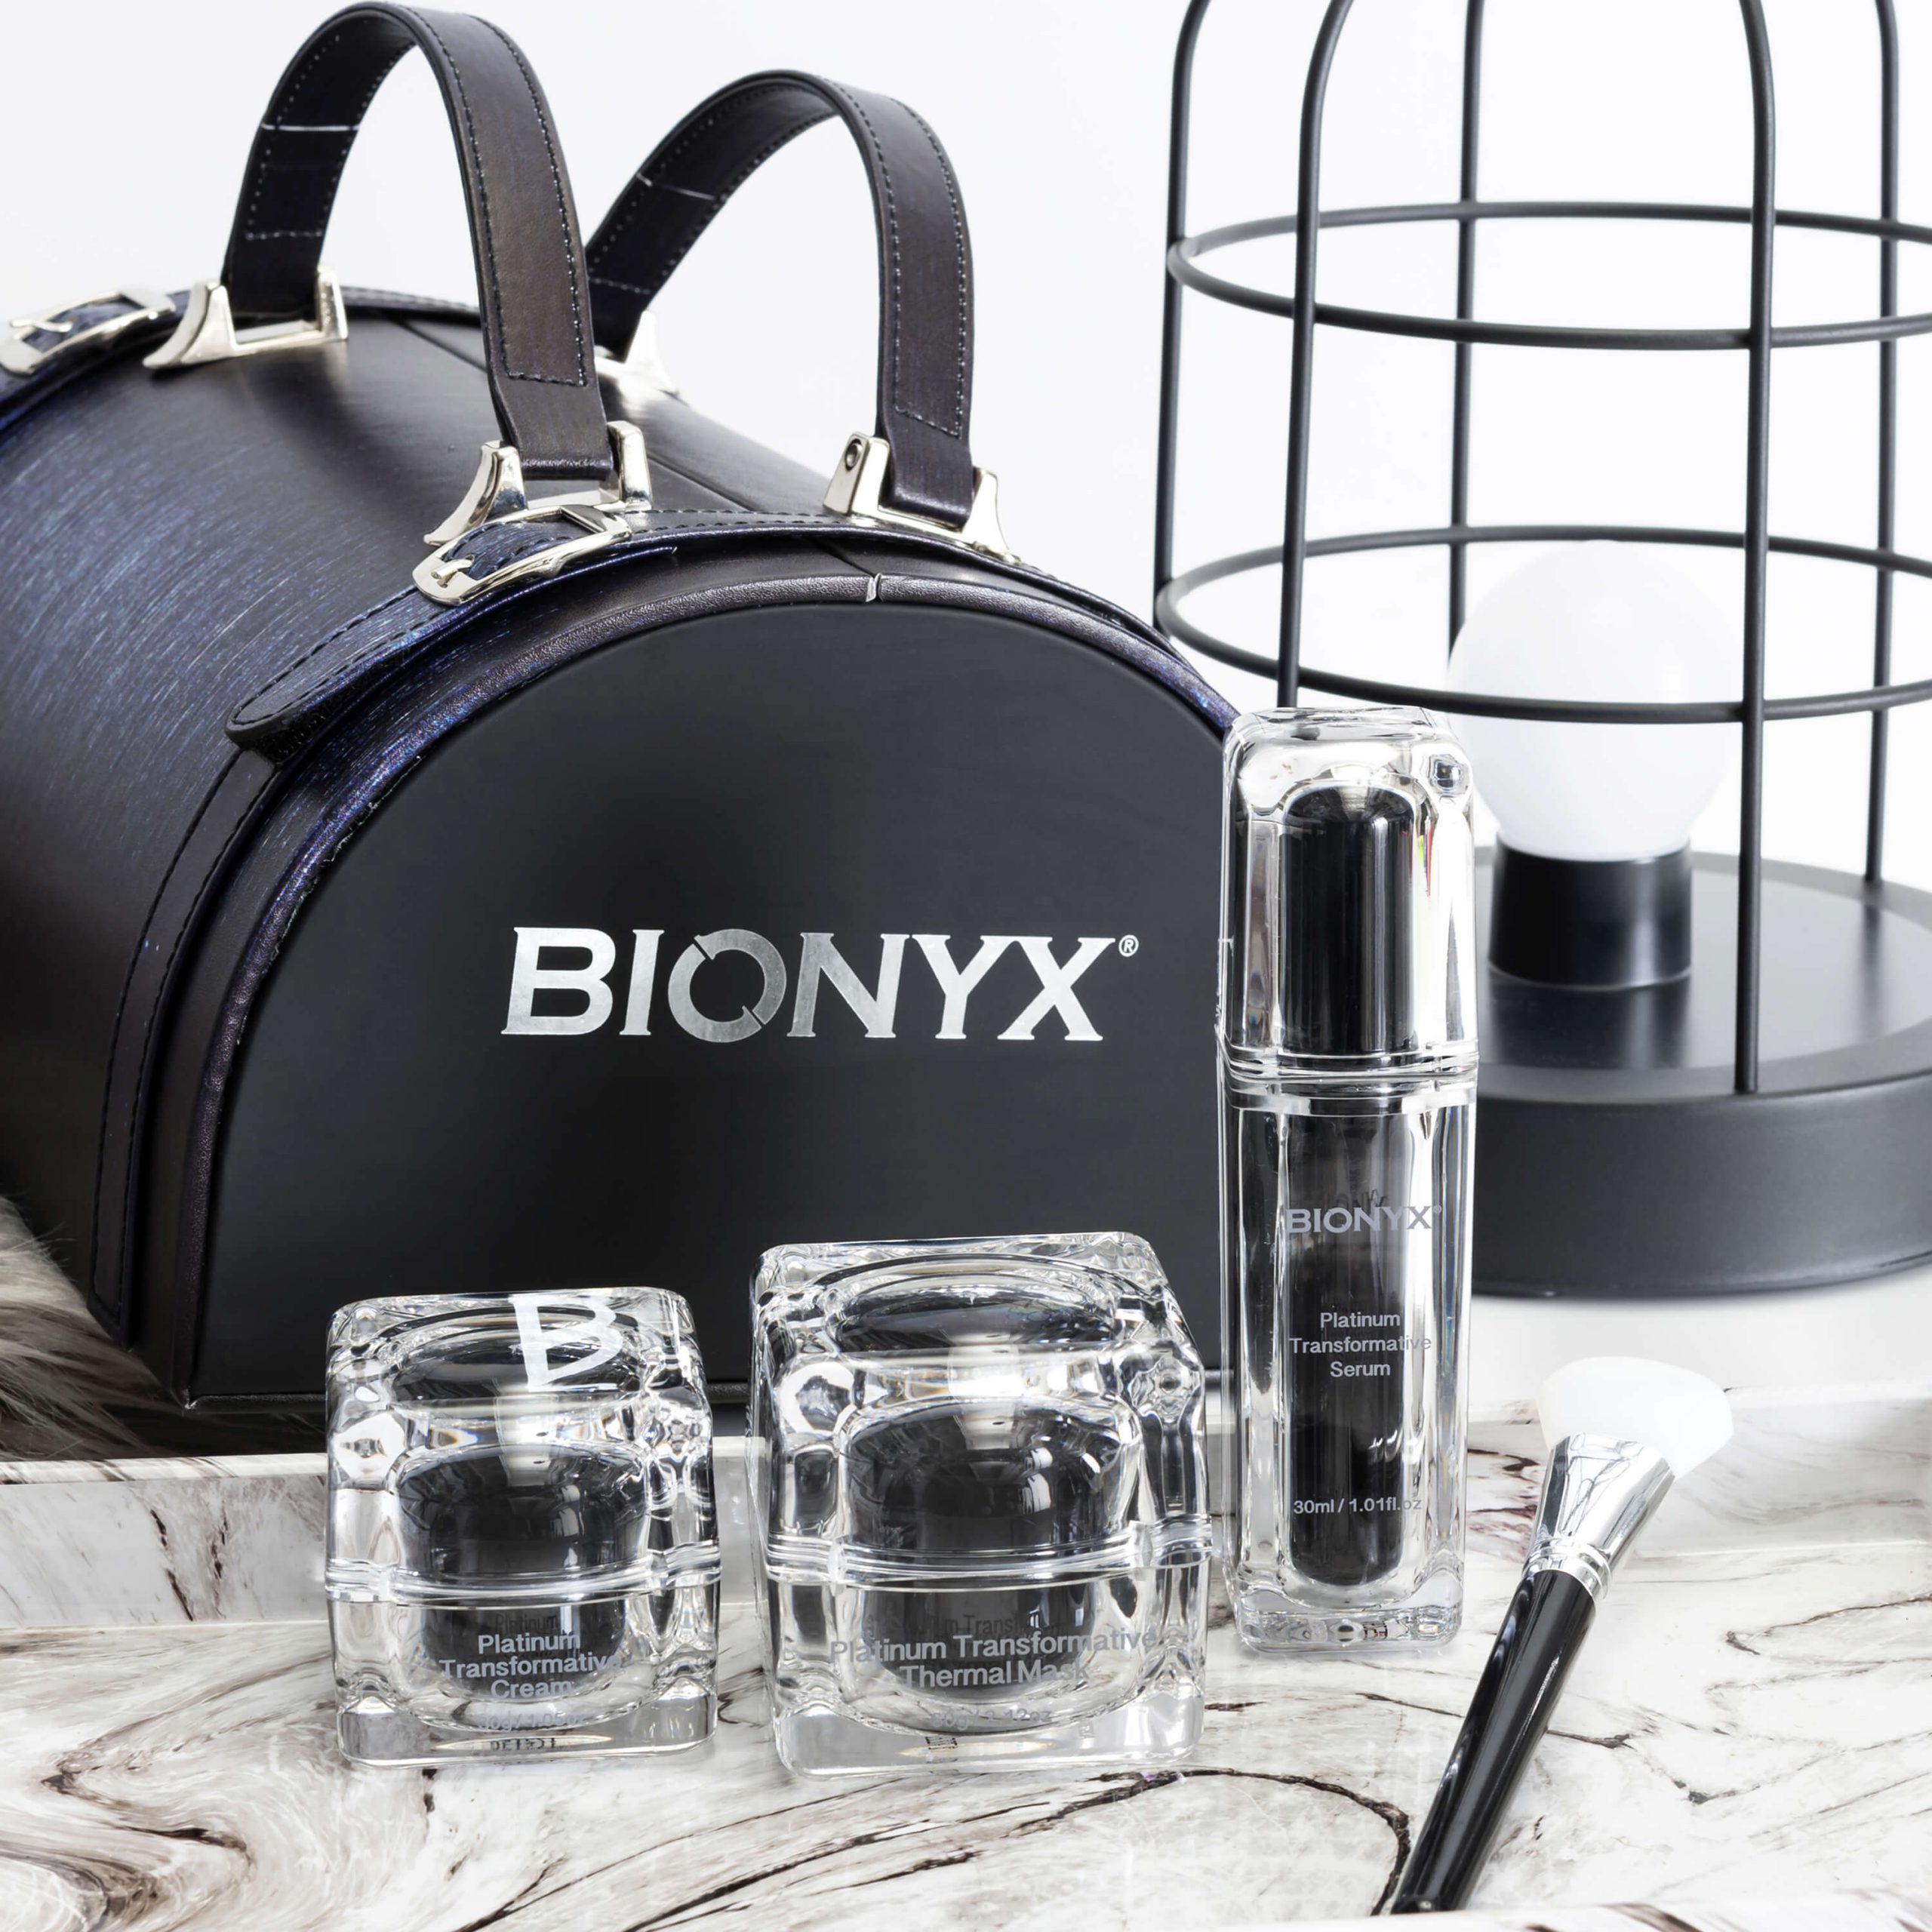 Bionyx gift set